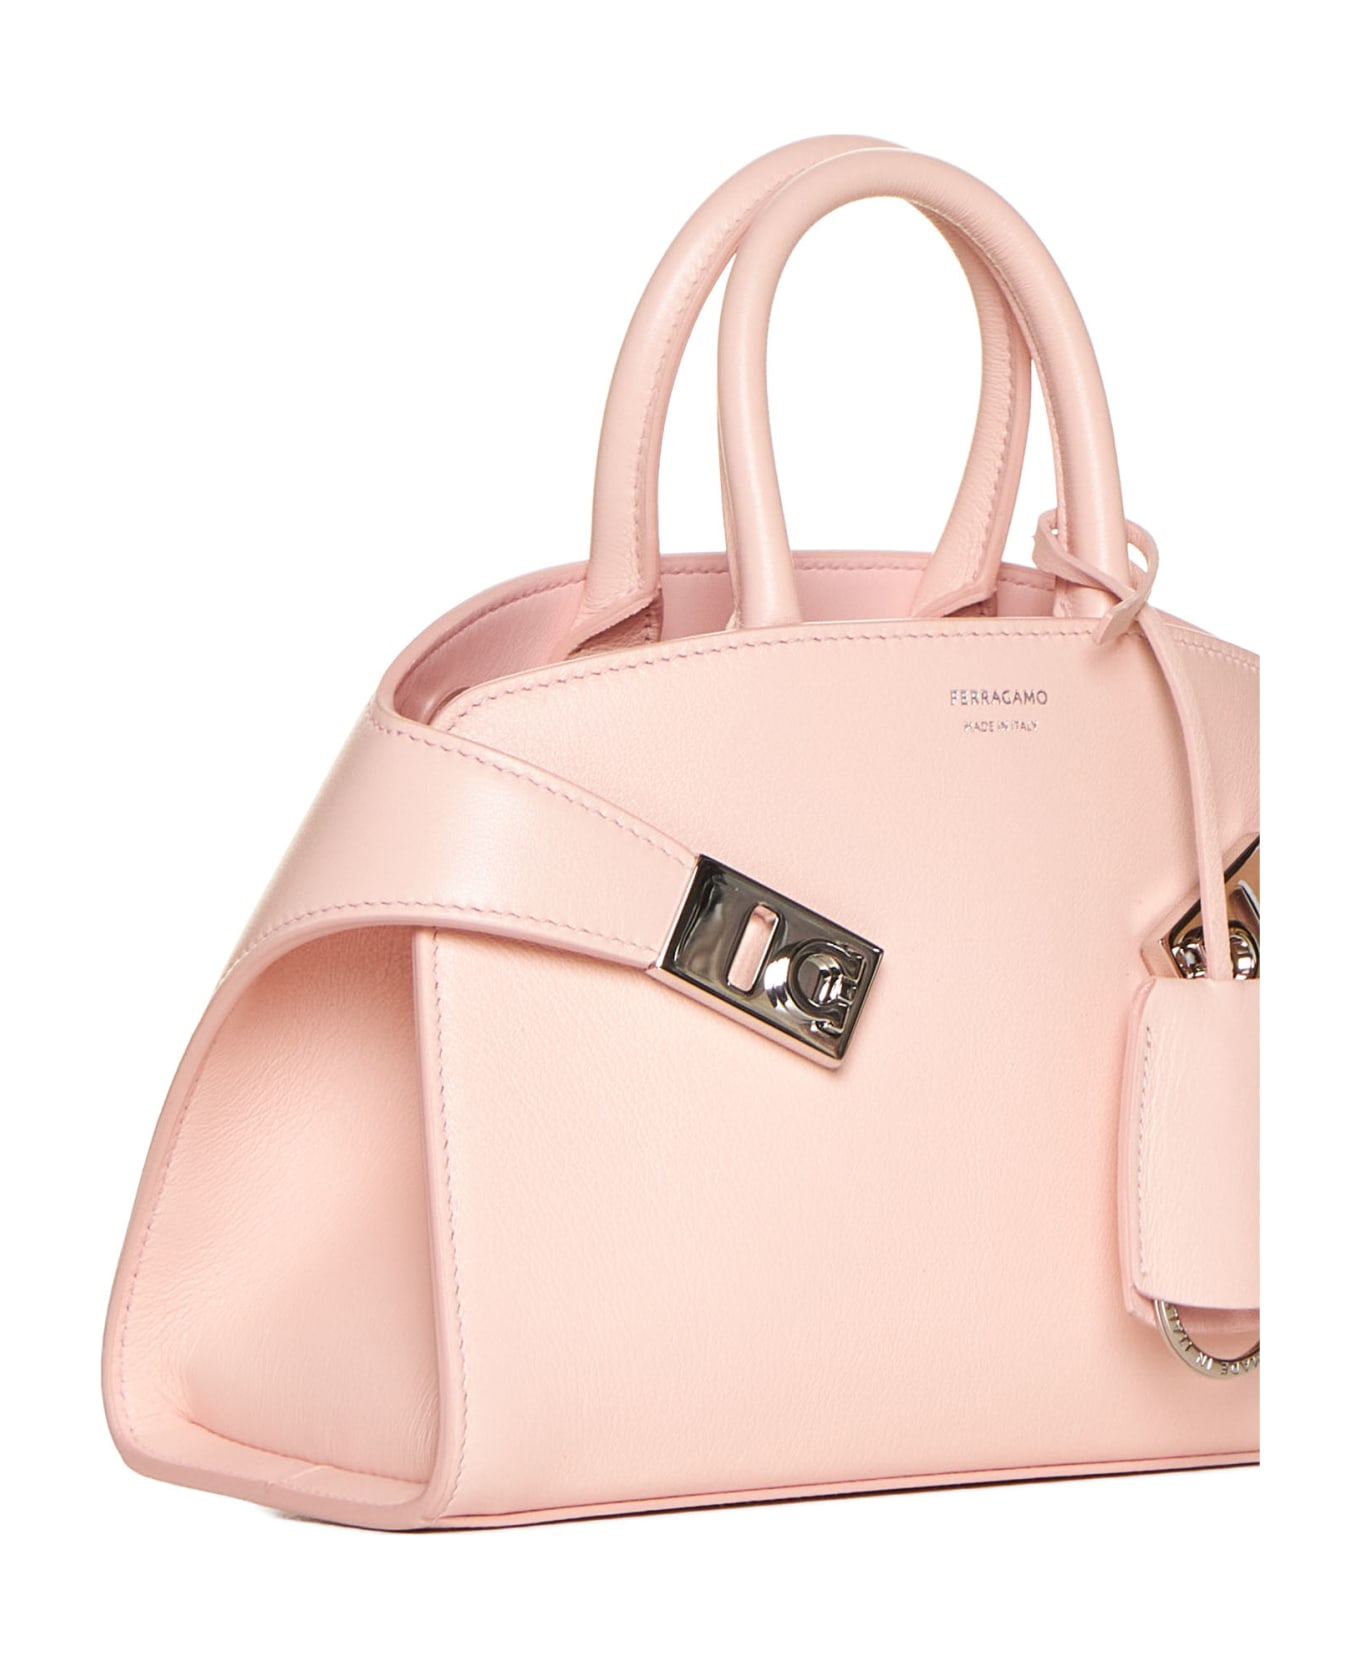 Ferragamo 'hug Mini' Handbag - Nylund pink